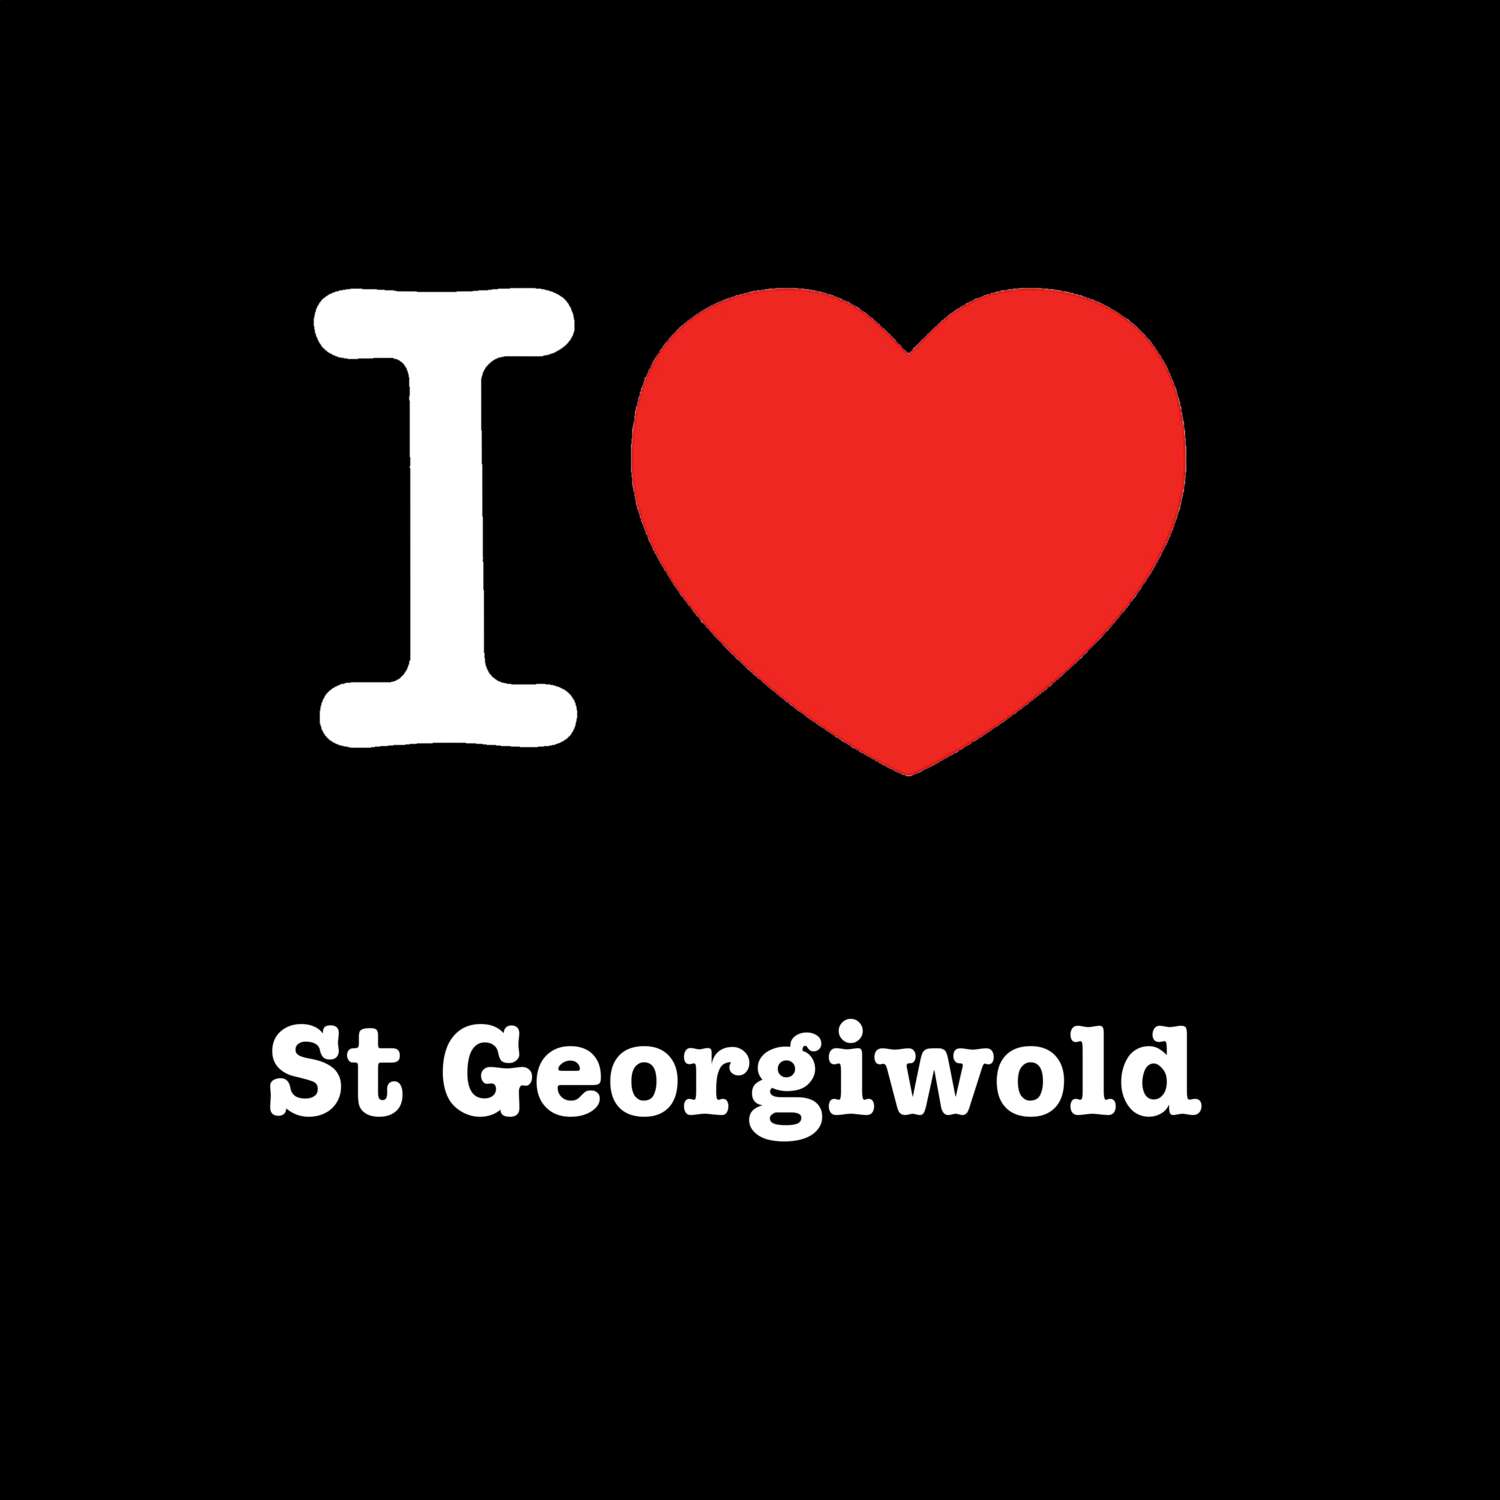 St Georgiwold T-Shirt »I love«